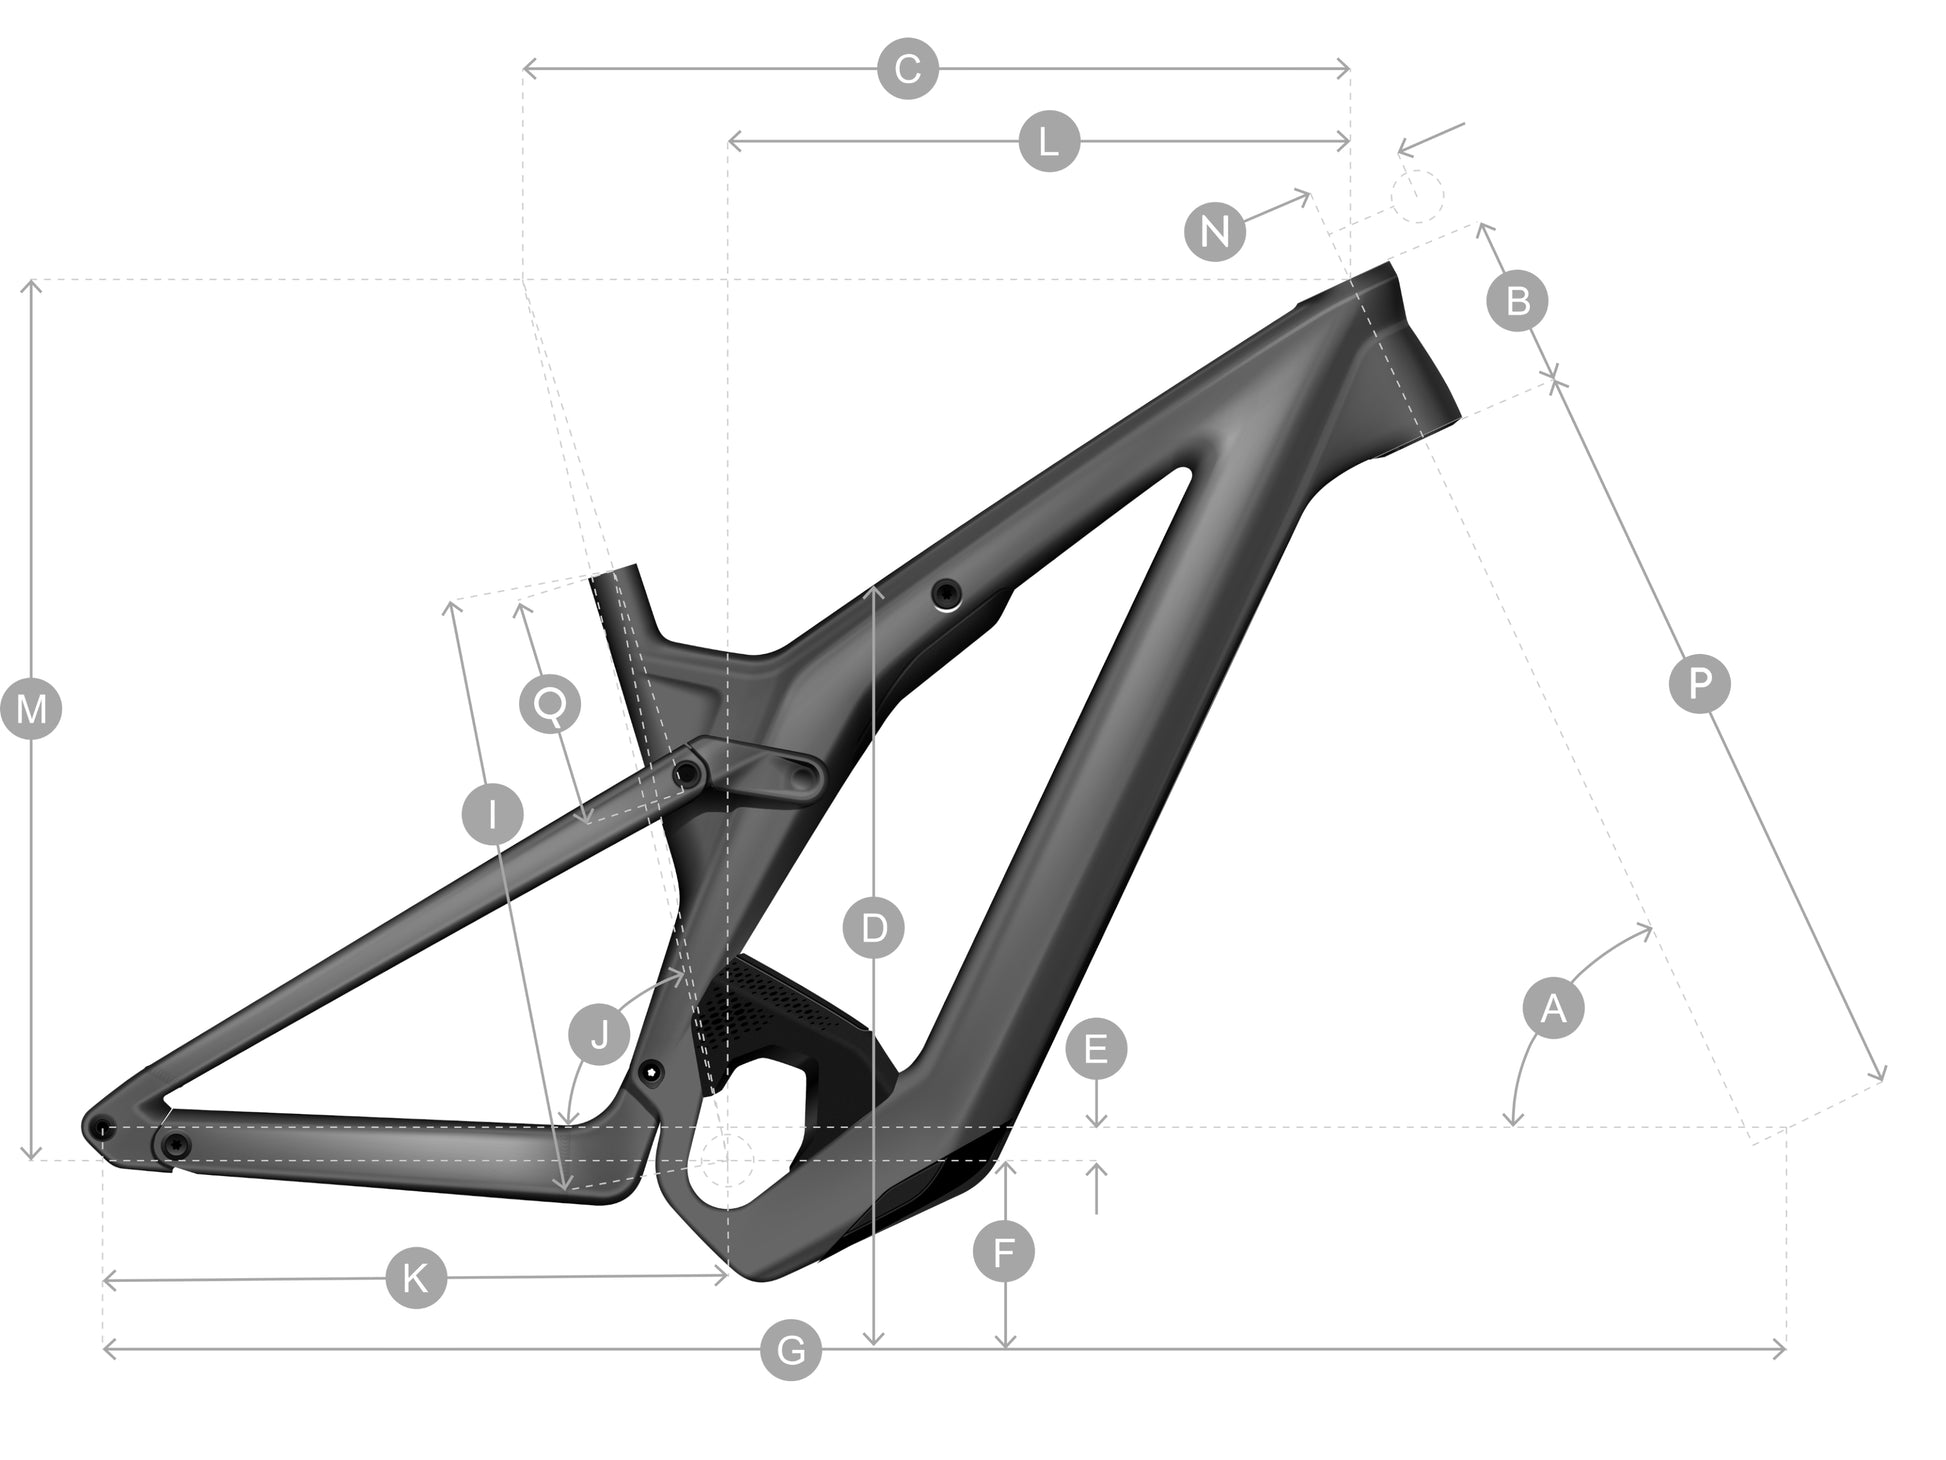 Scott Patron eRide 900 eMTB full suspension geometry reference image